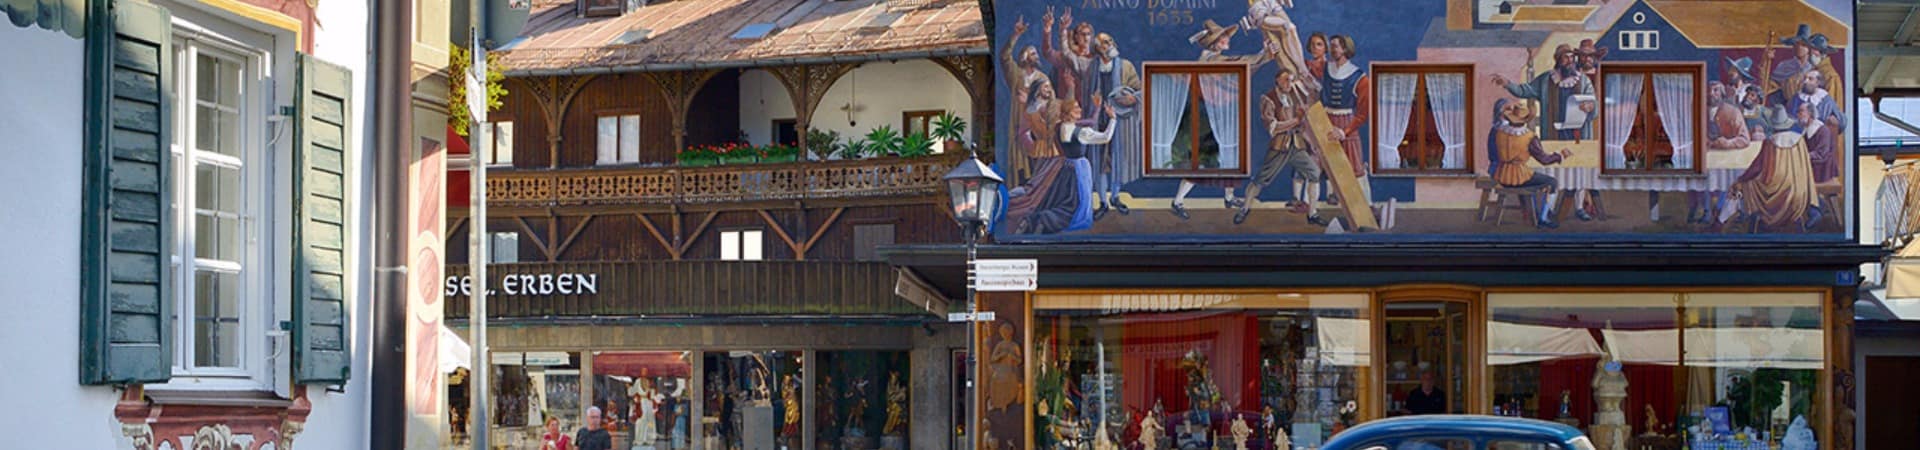 German national tourist board centro oberammergau